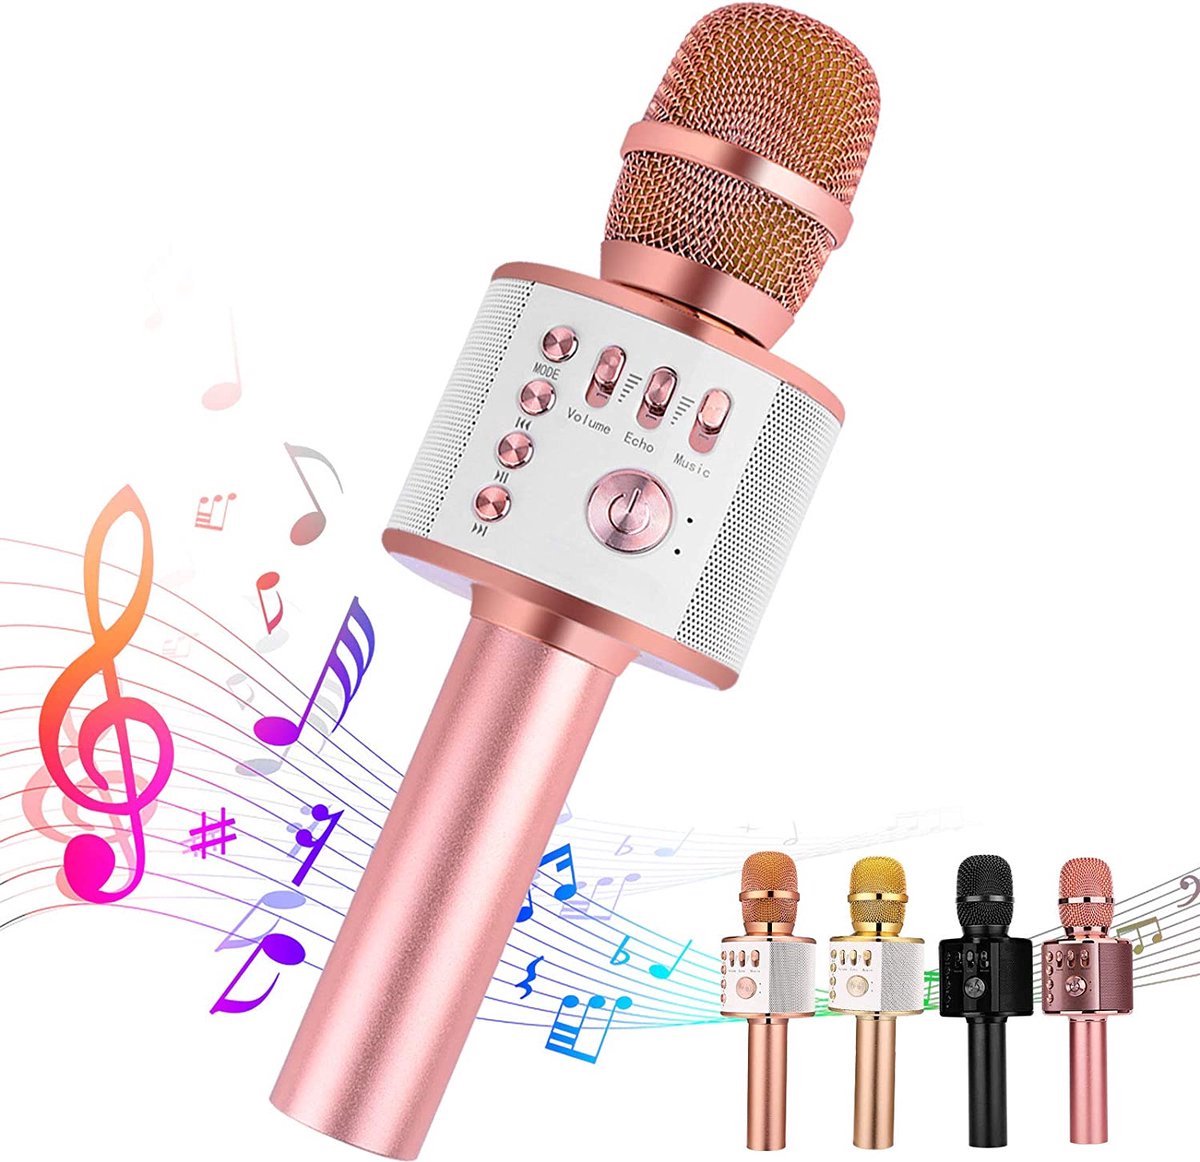 Microphone Sans Fil Karaoké, Ankuka Micro Karaoke Enfant avec